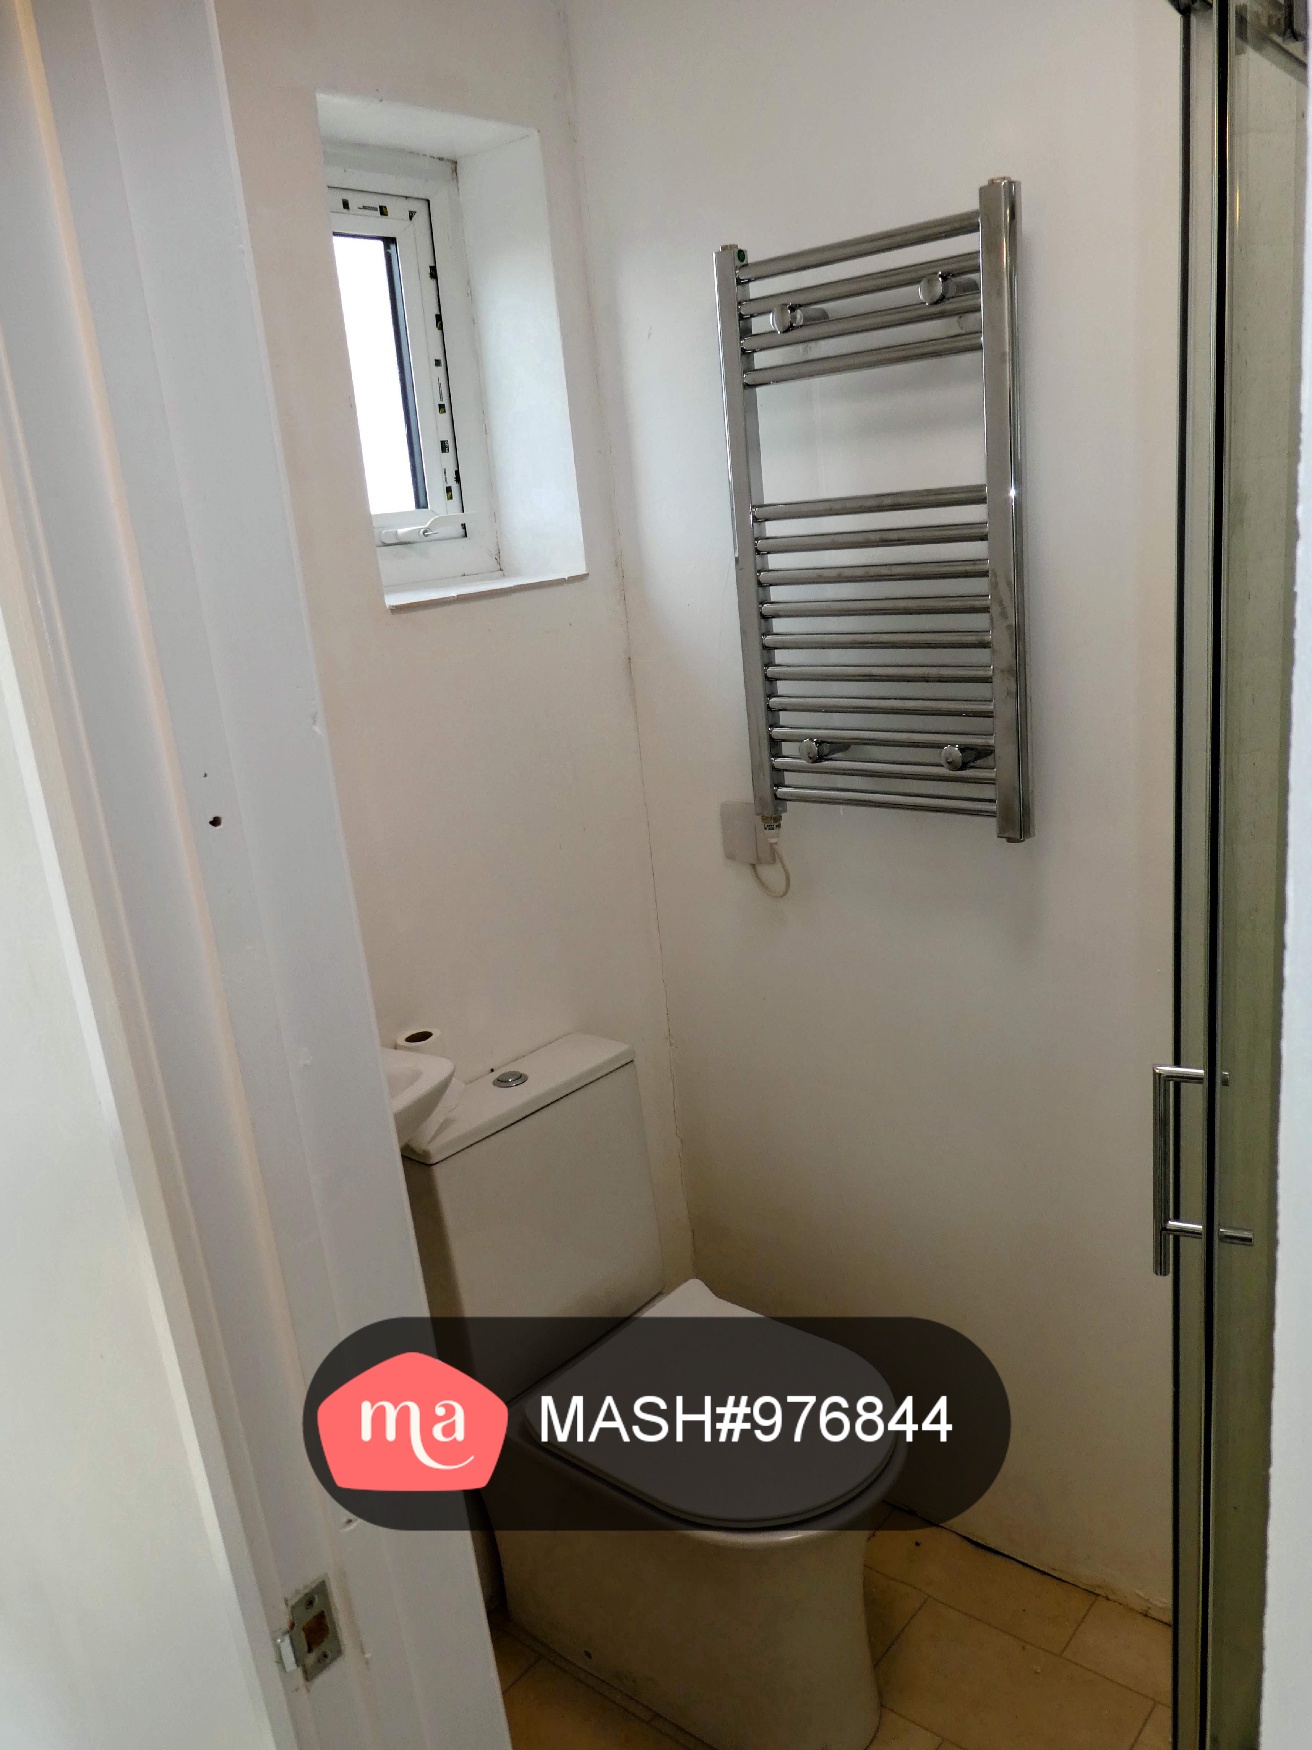 1 Bedroom Detached to rent in Worthing - Mashroom